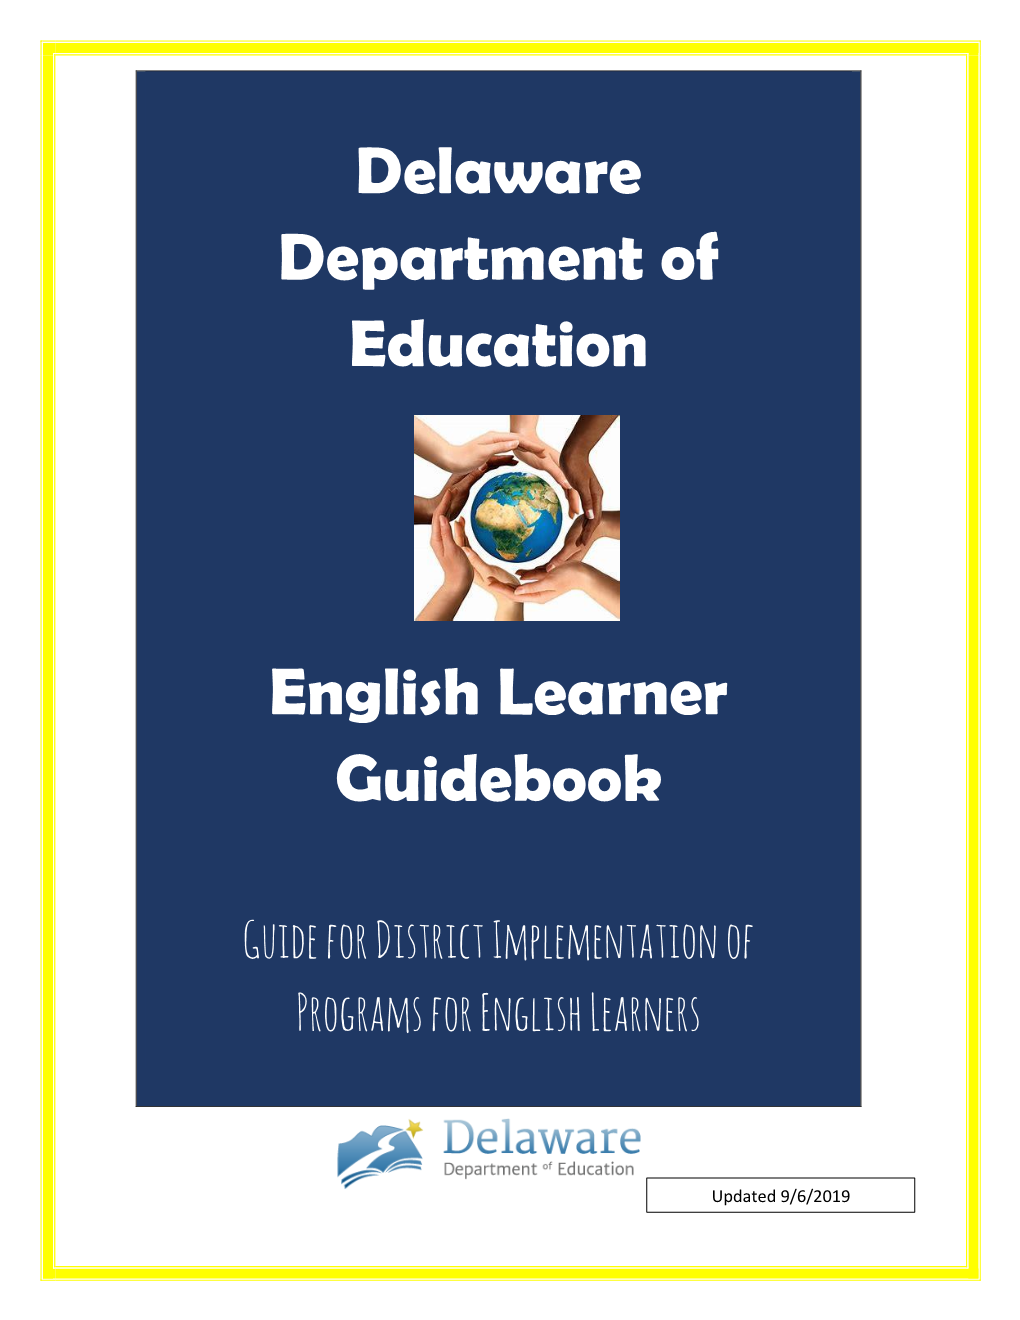 Delaware Department of Education English Learner Guidebook